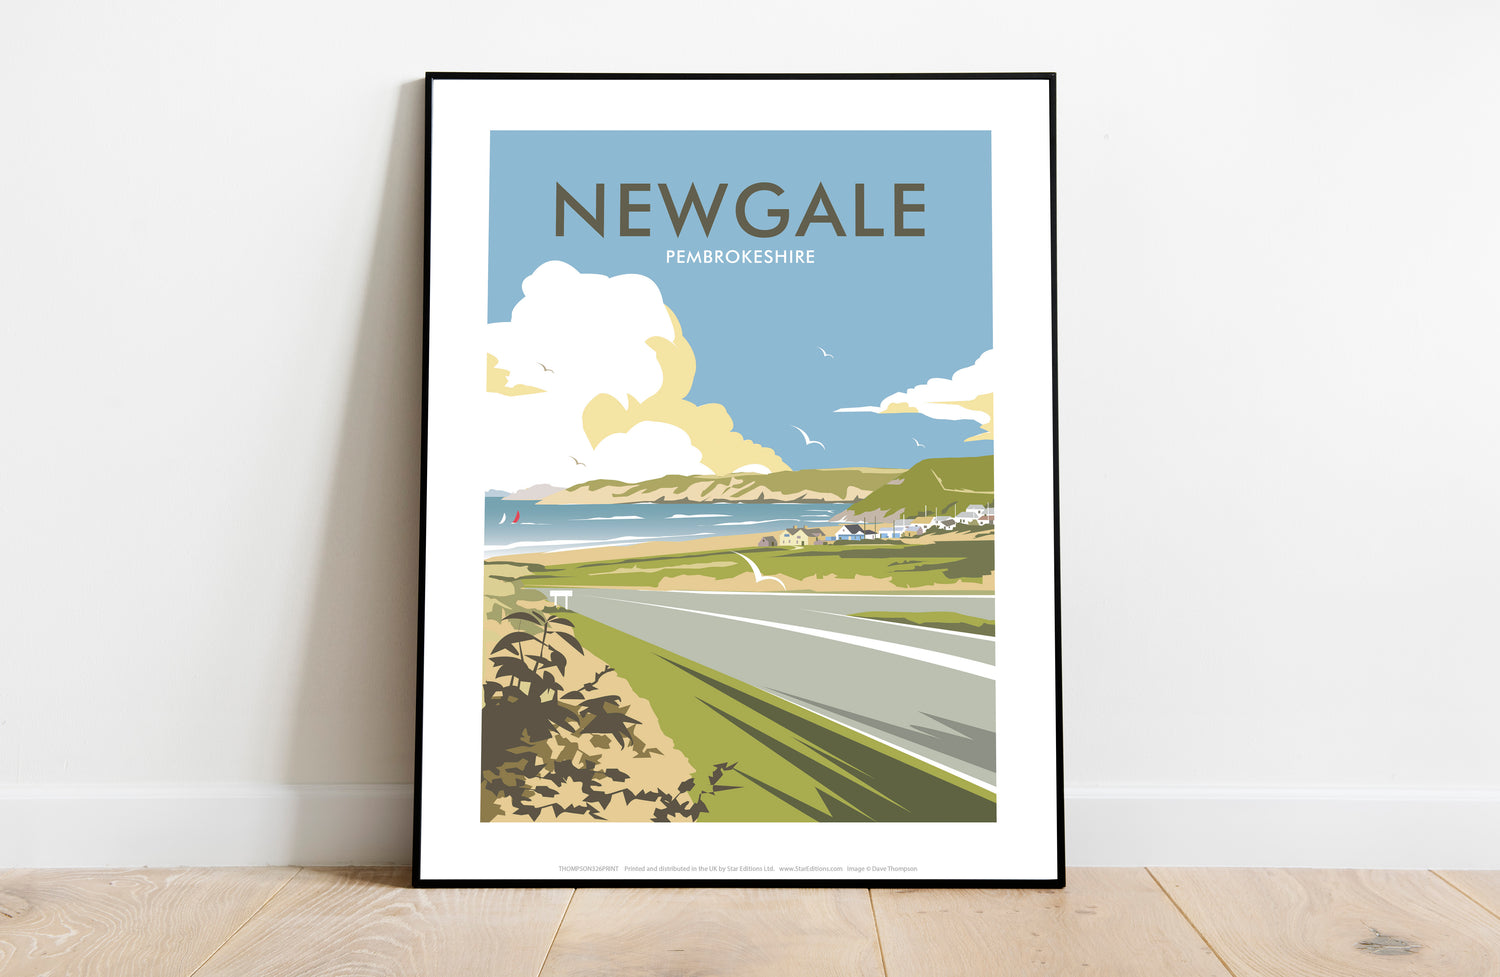 Newgale, Pembrokeshire - Art Print